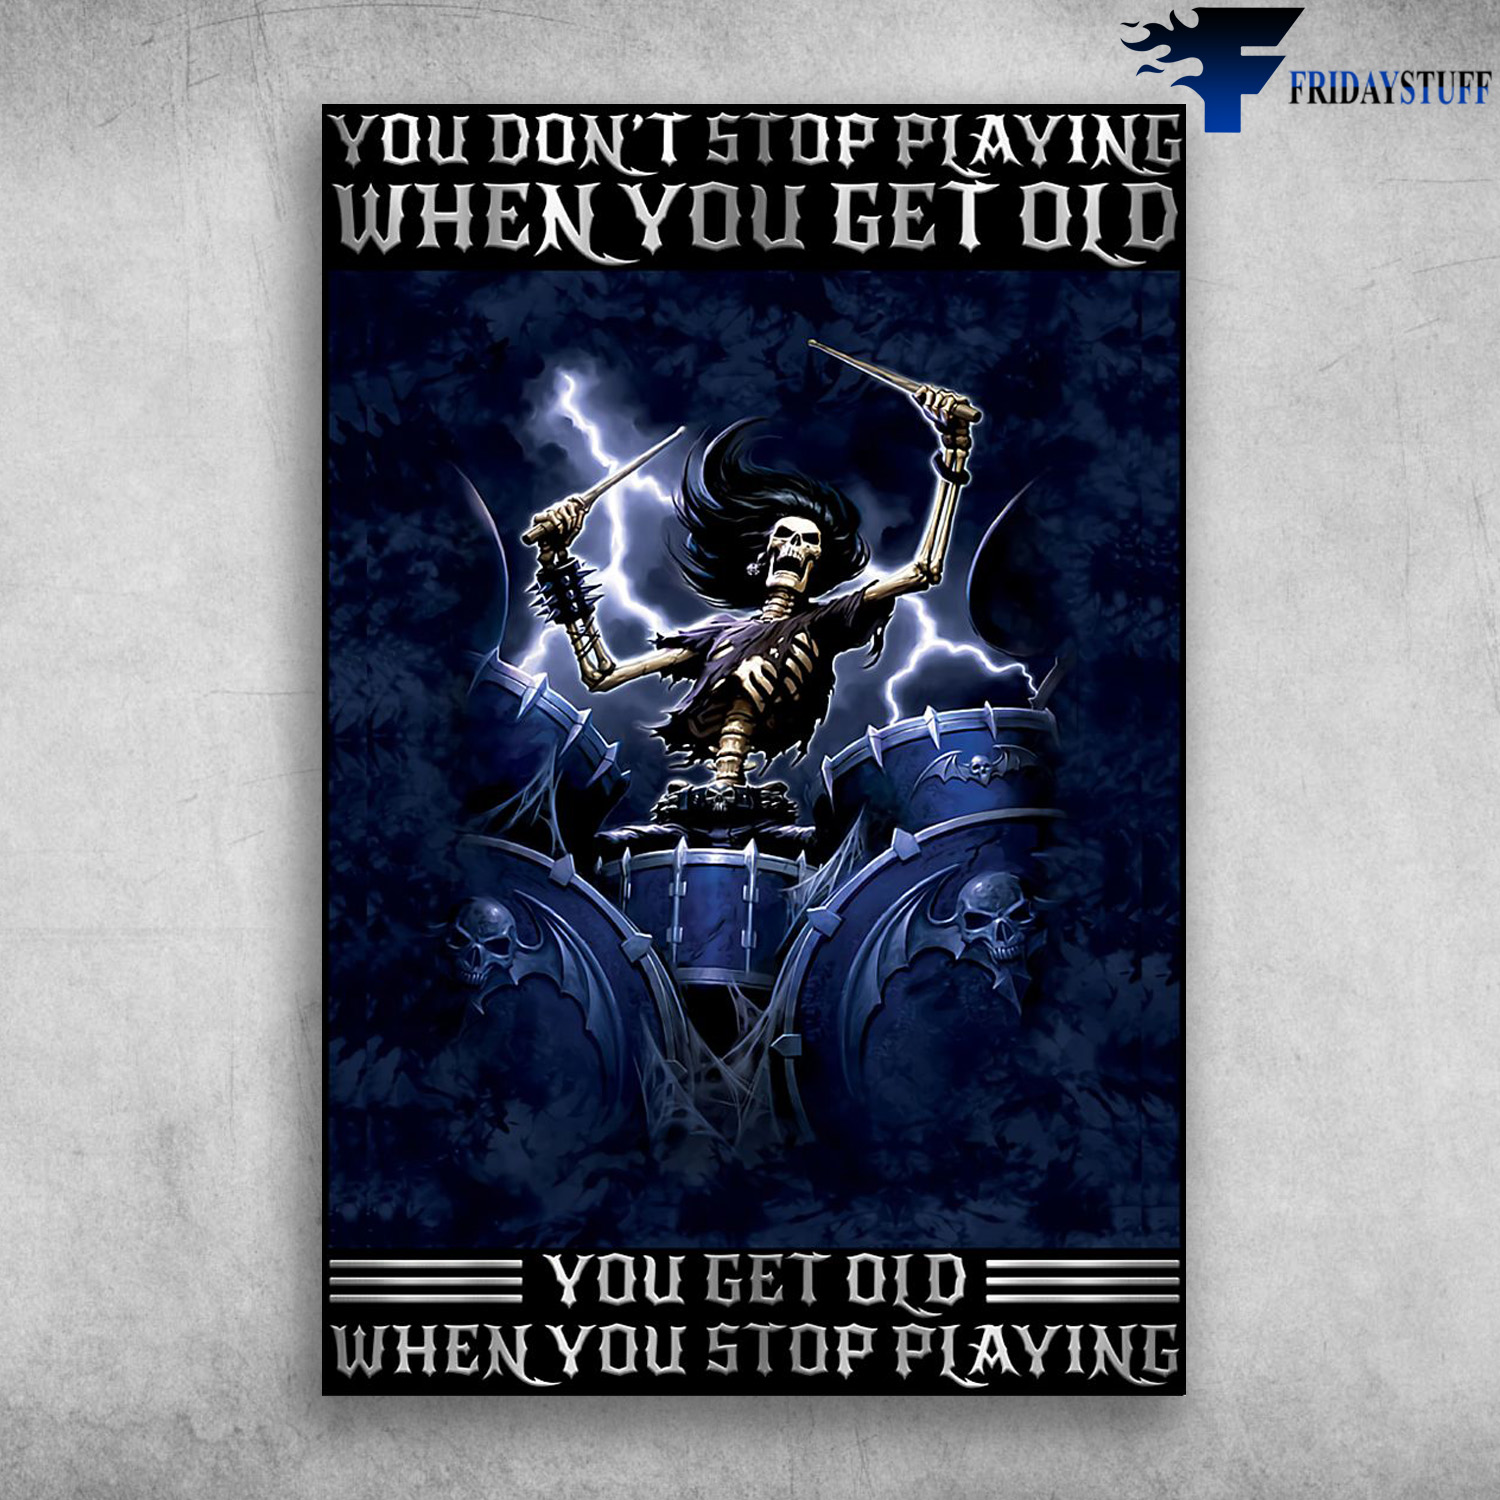 Skeleton Drumming - You Don't Stop Playing When You Get Old, You Get Old When You Stop Playing